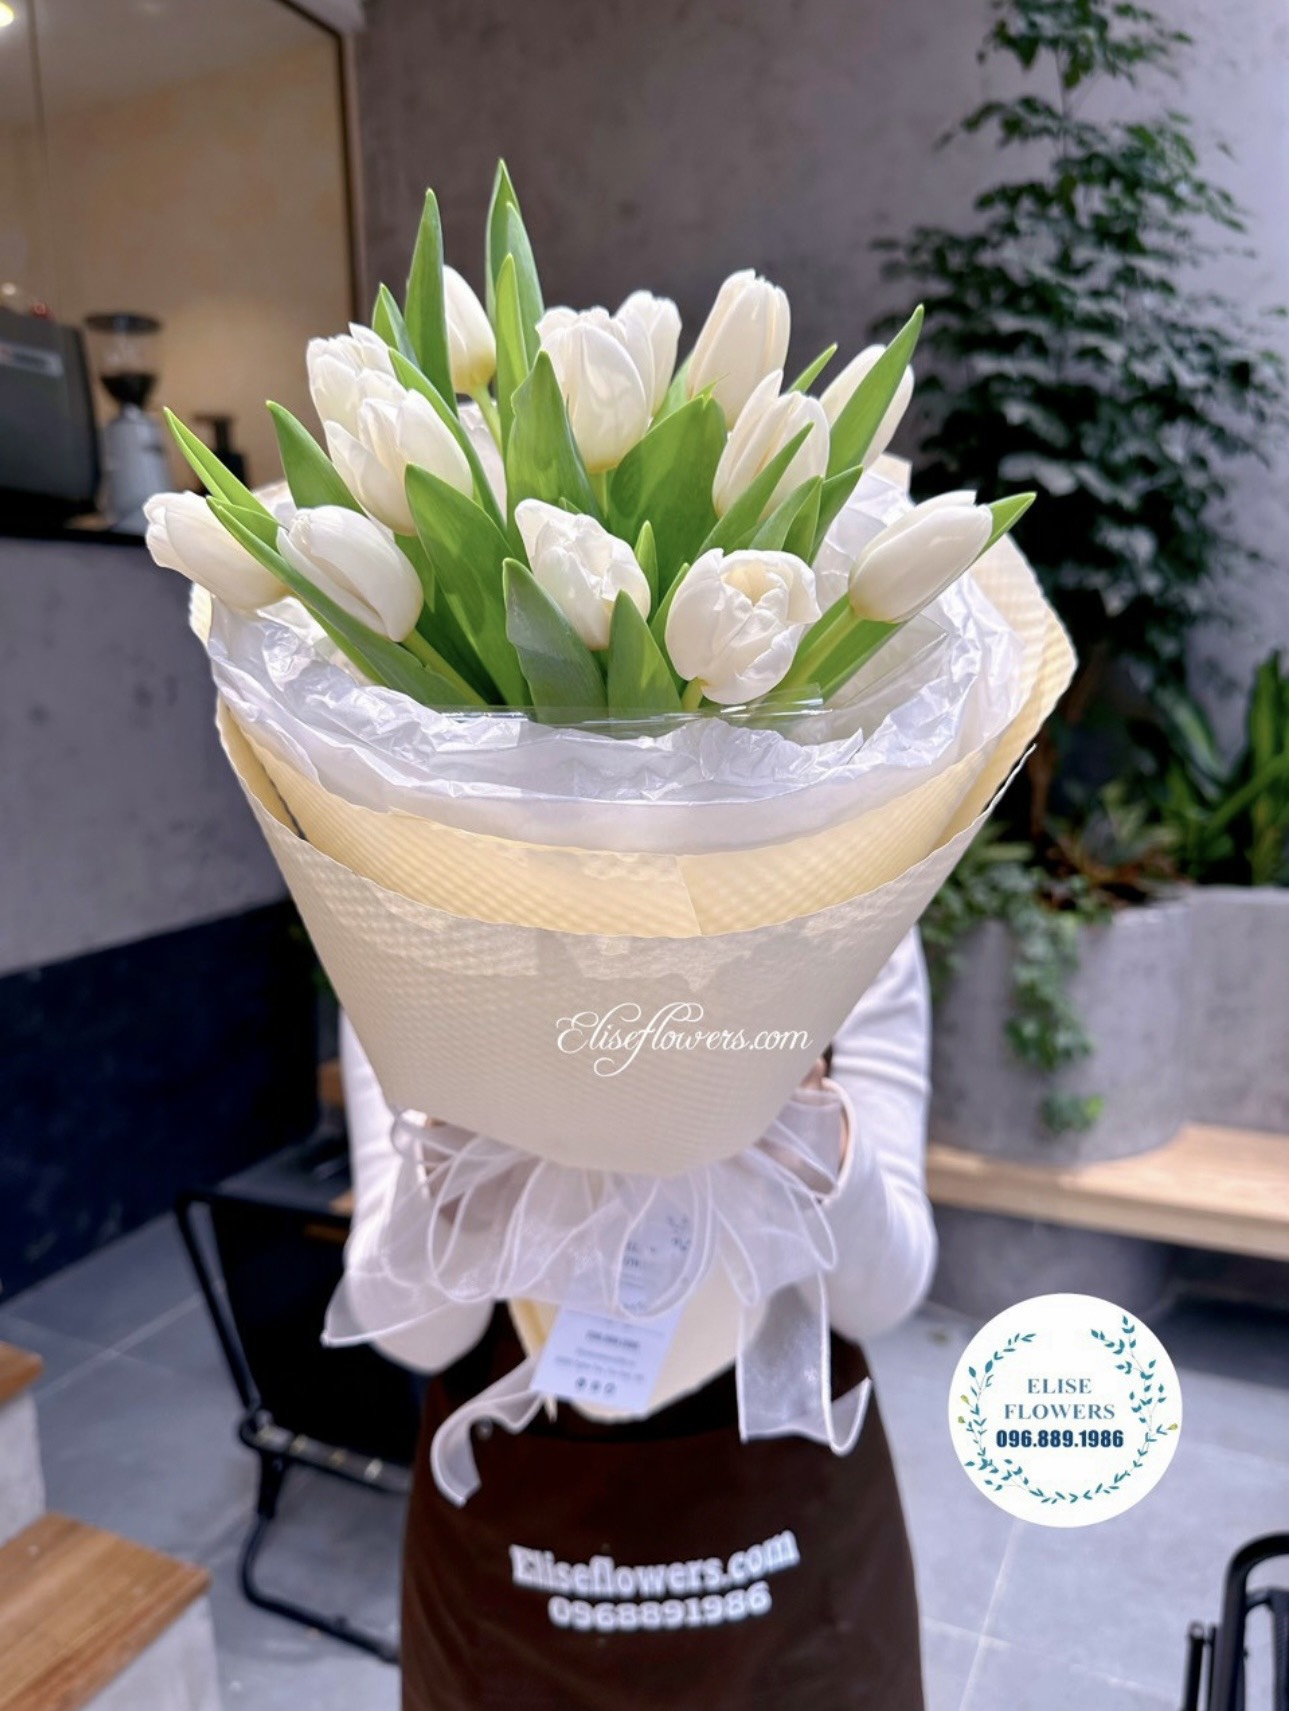 HOA TULIP CẦU GIẤY. Bó hoa tulip quận Cầu Giấy. Bó hoa tulip tặng sinh nhật ở Hà Nội.